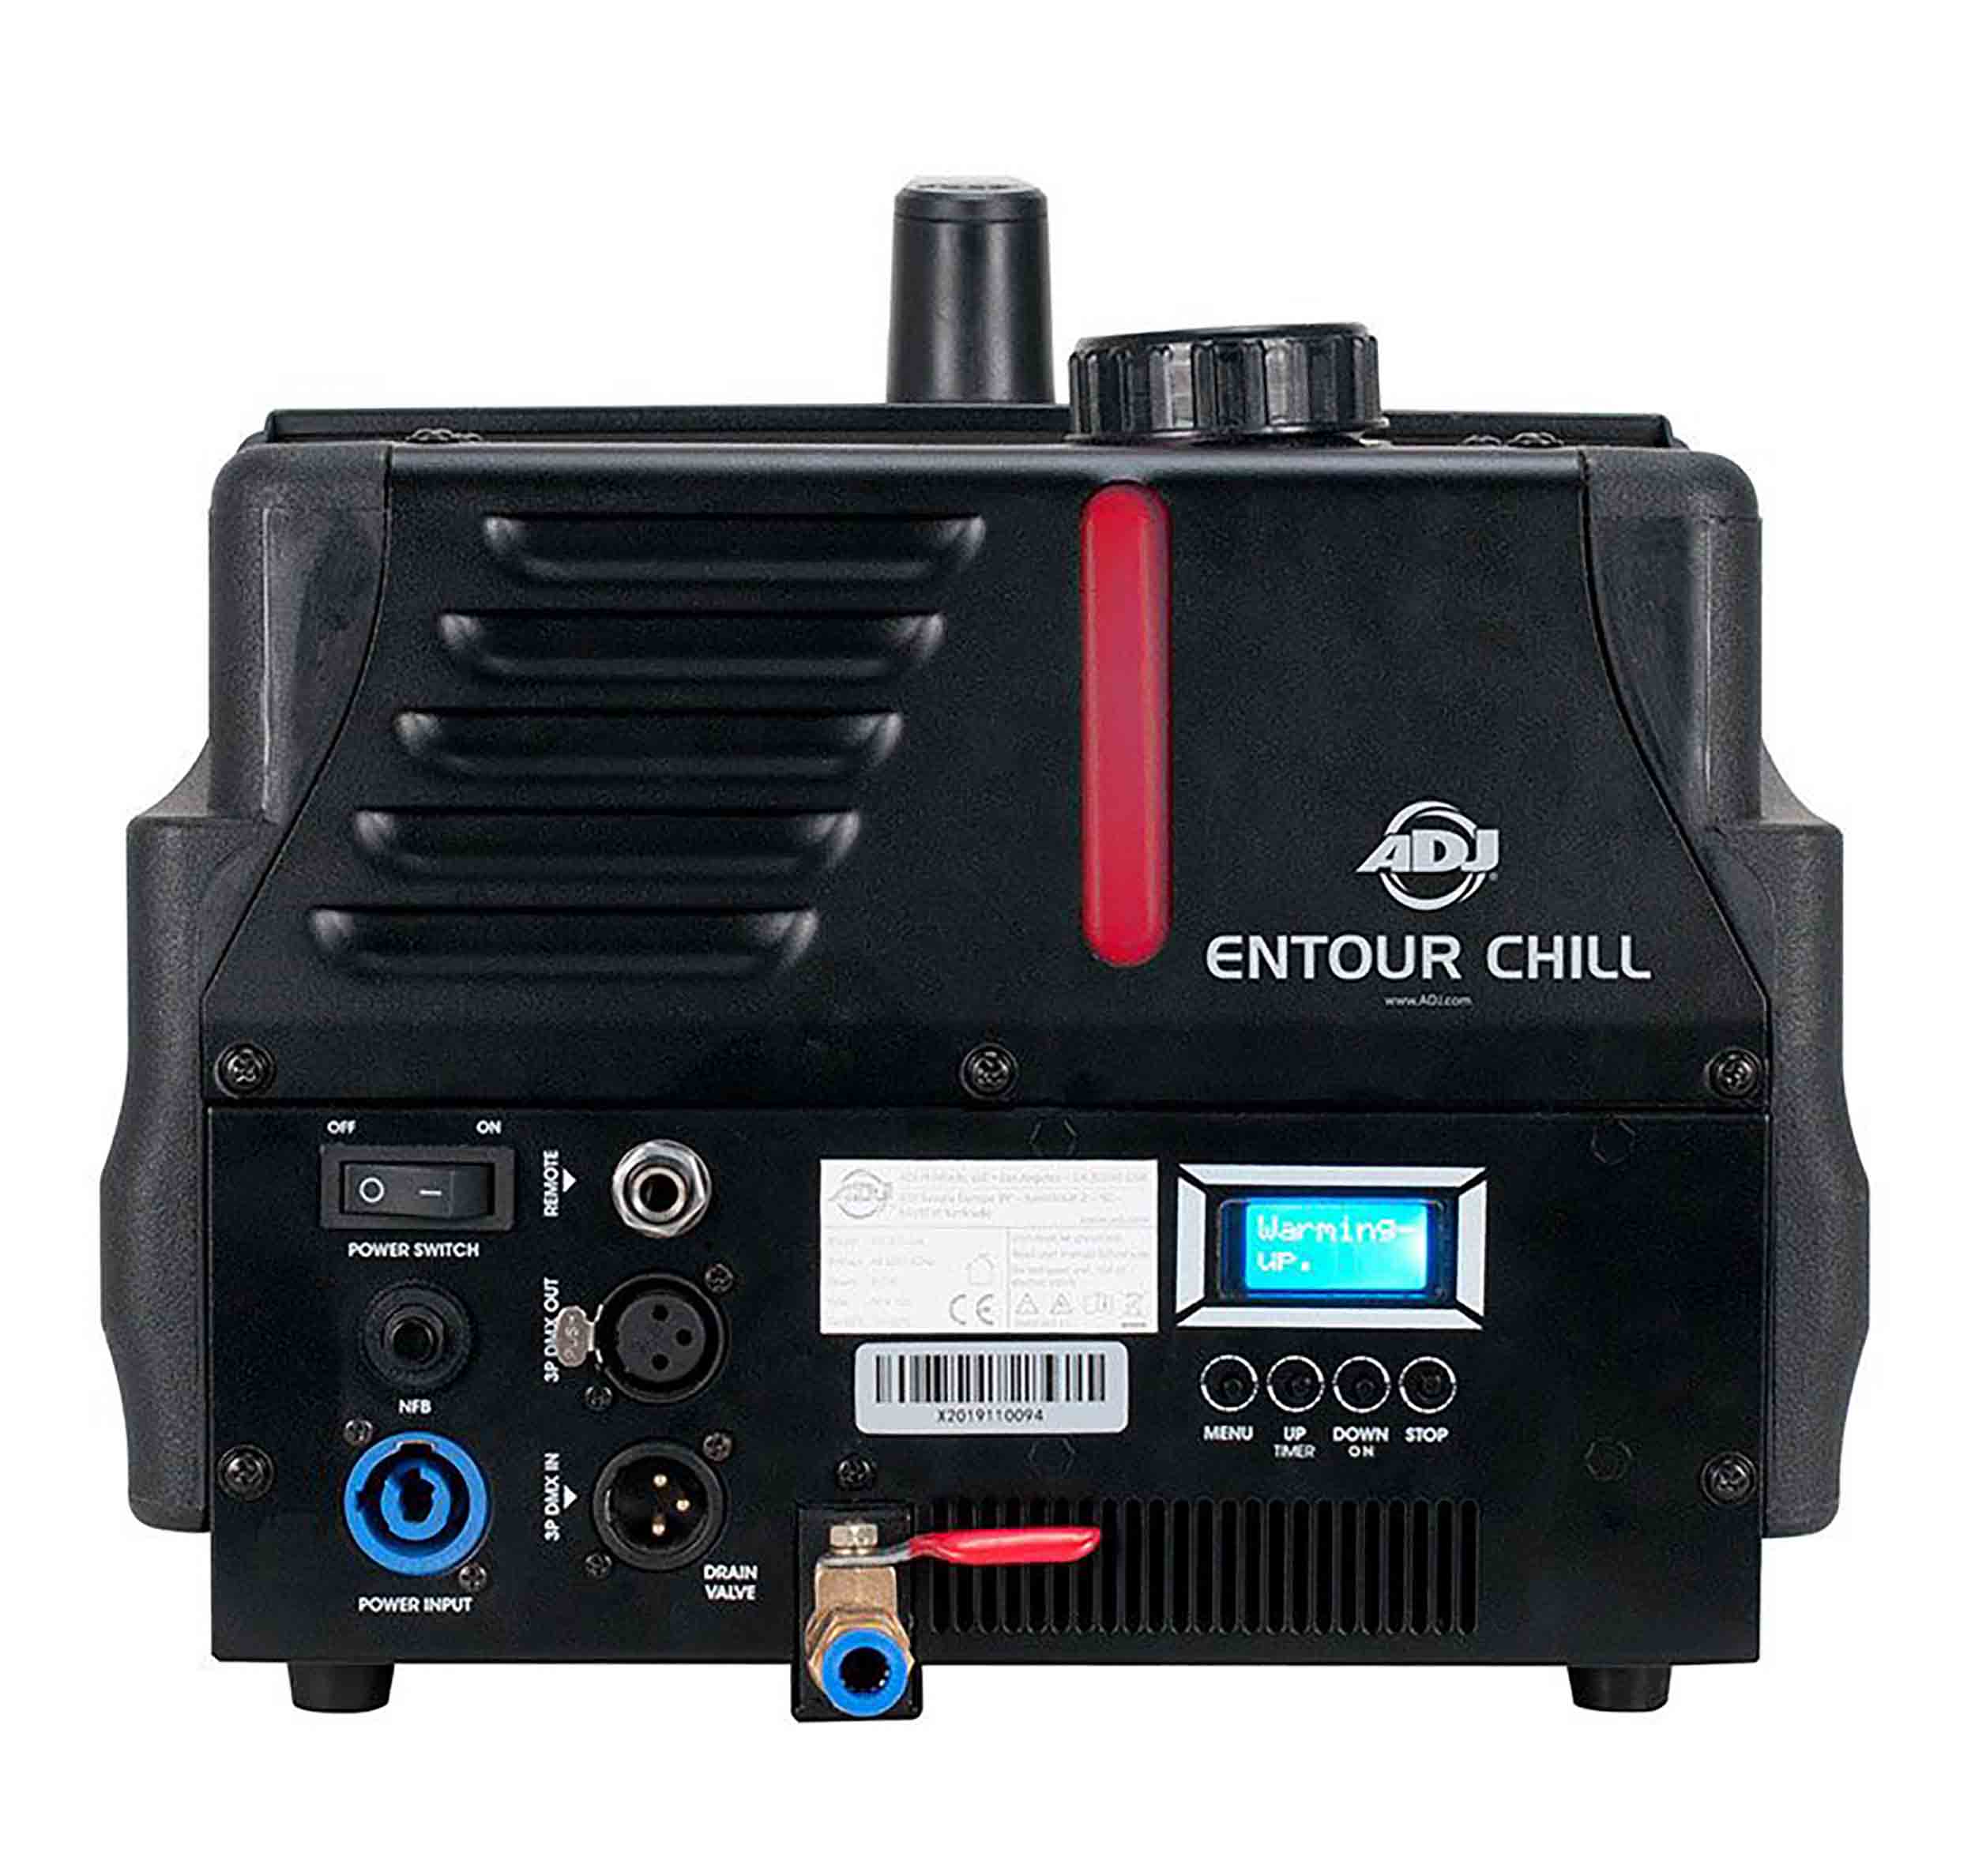 ADJ Entour Chill, Low-Lying Fog Machine with Wired Digital Communication Network - 800 Watt by ADJ